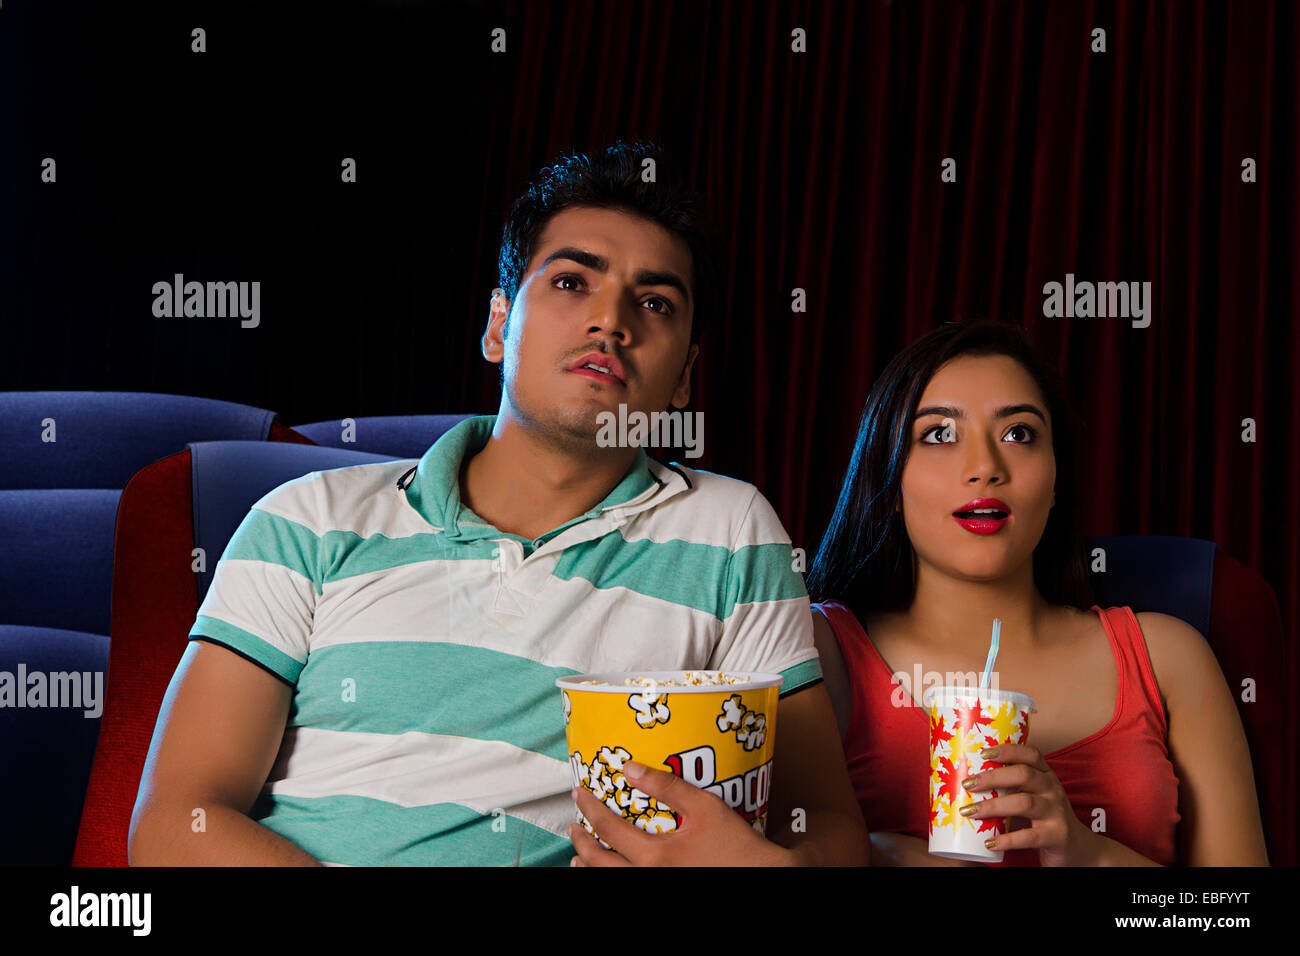 indian couple Cinema Hall enjoy Movie Stock Photo